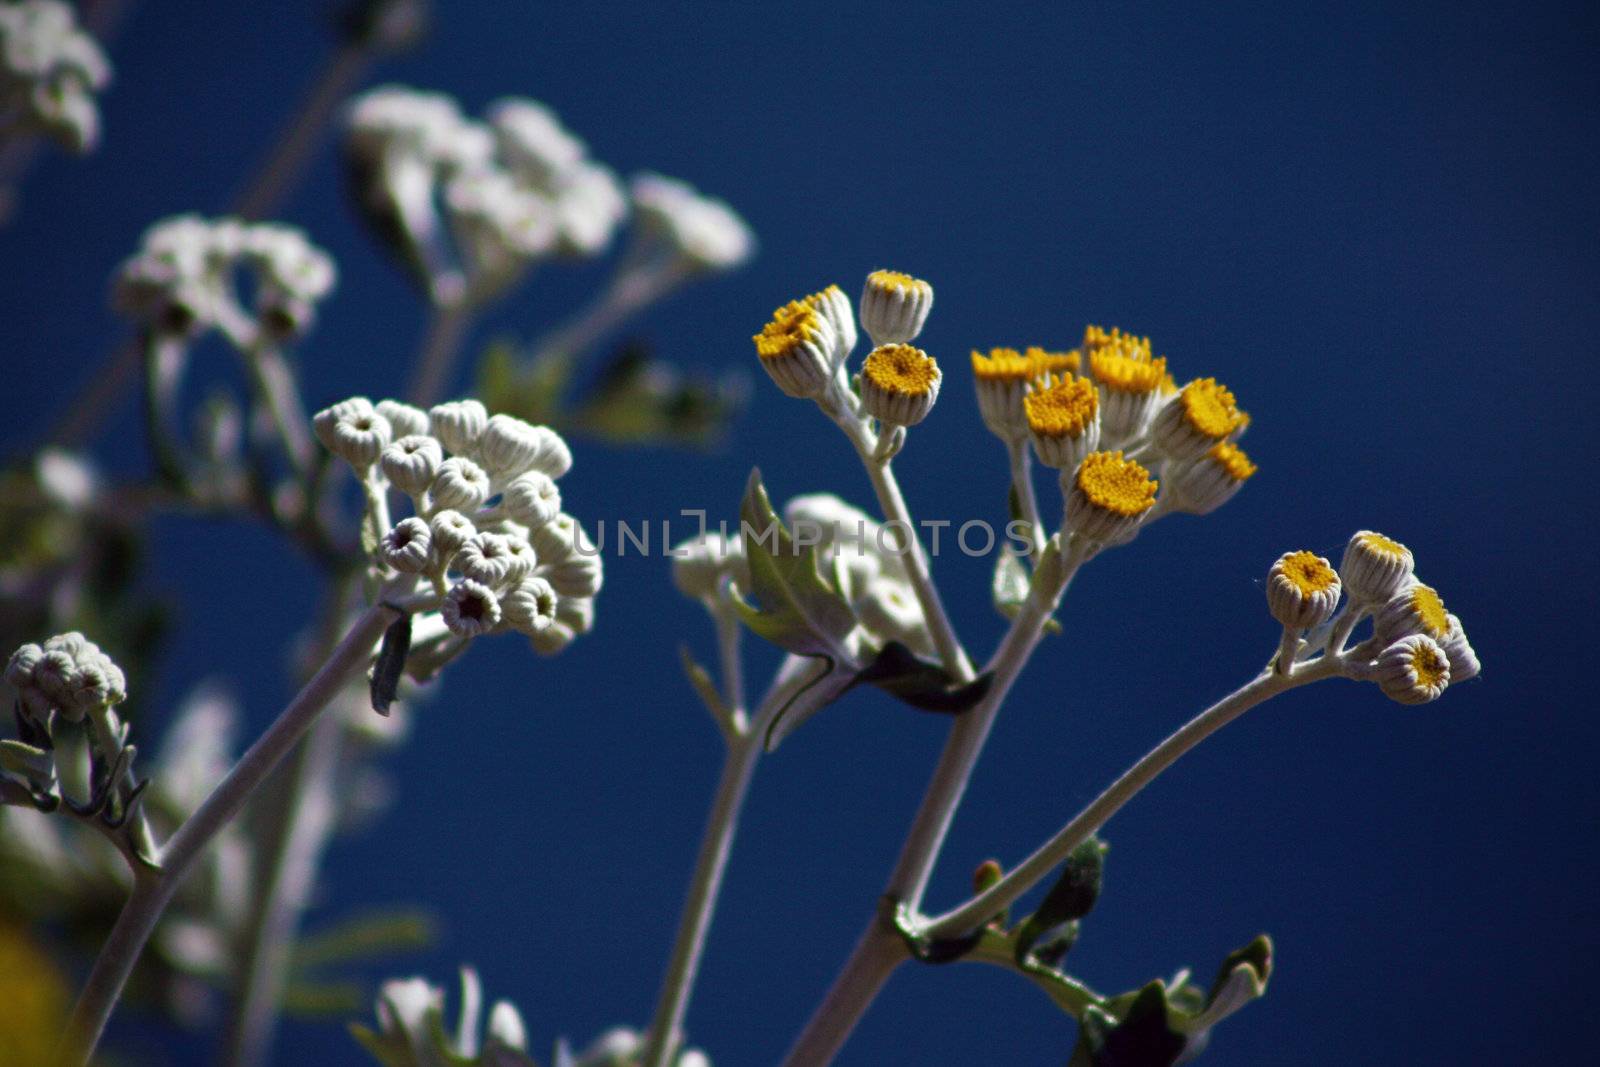 Flowers on blue sky background. Manarola in Italy